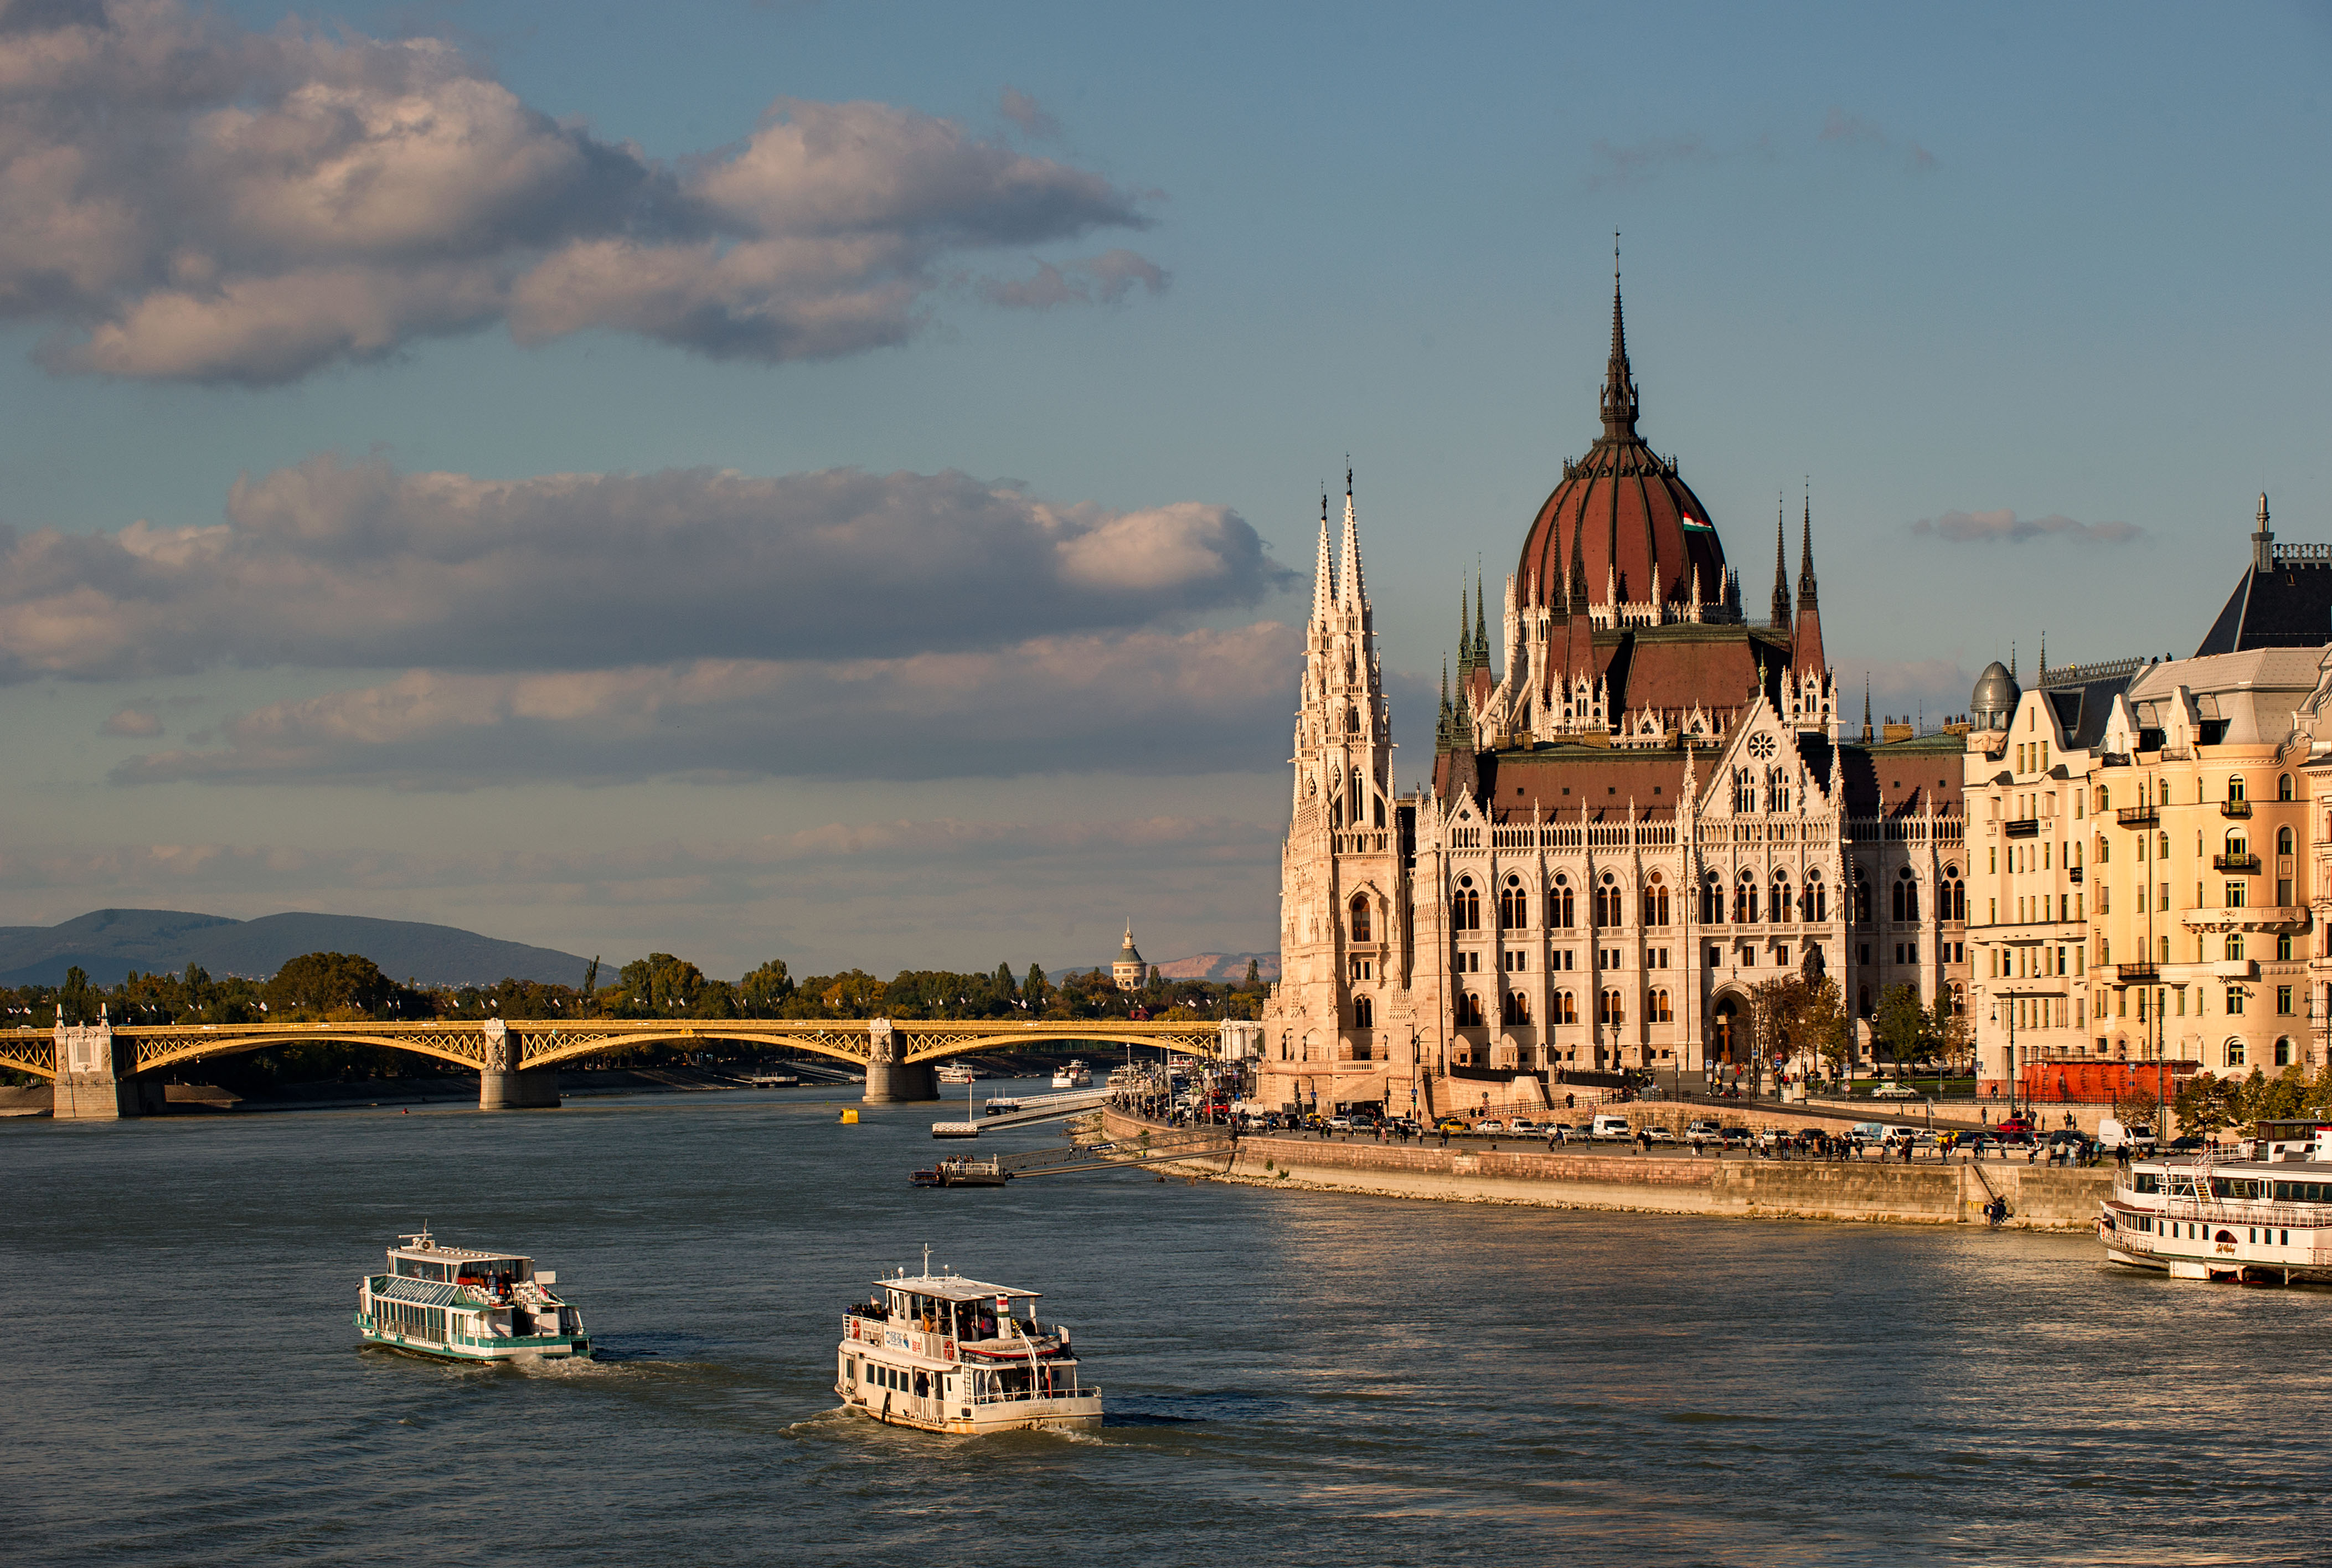 Rita的德國採購&旅遊日記: 匈牙利-布達佩斯Budapest超美夜景 遊船推薦Legenda